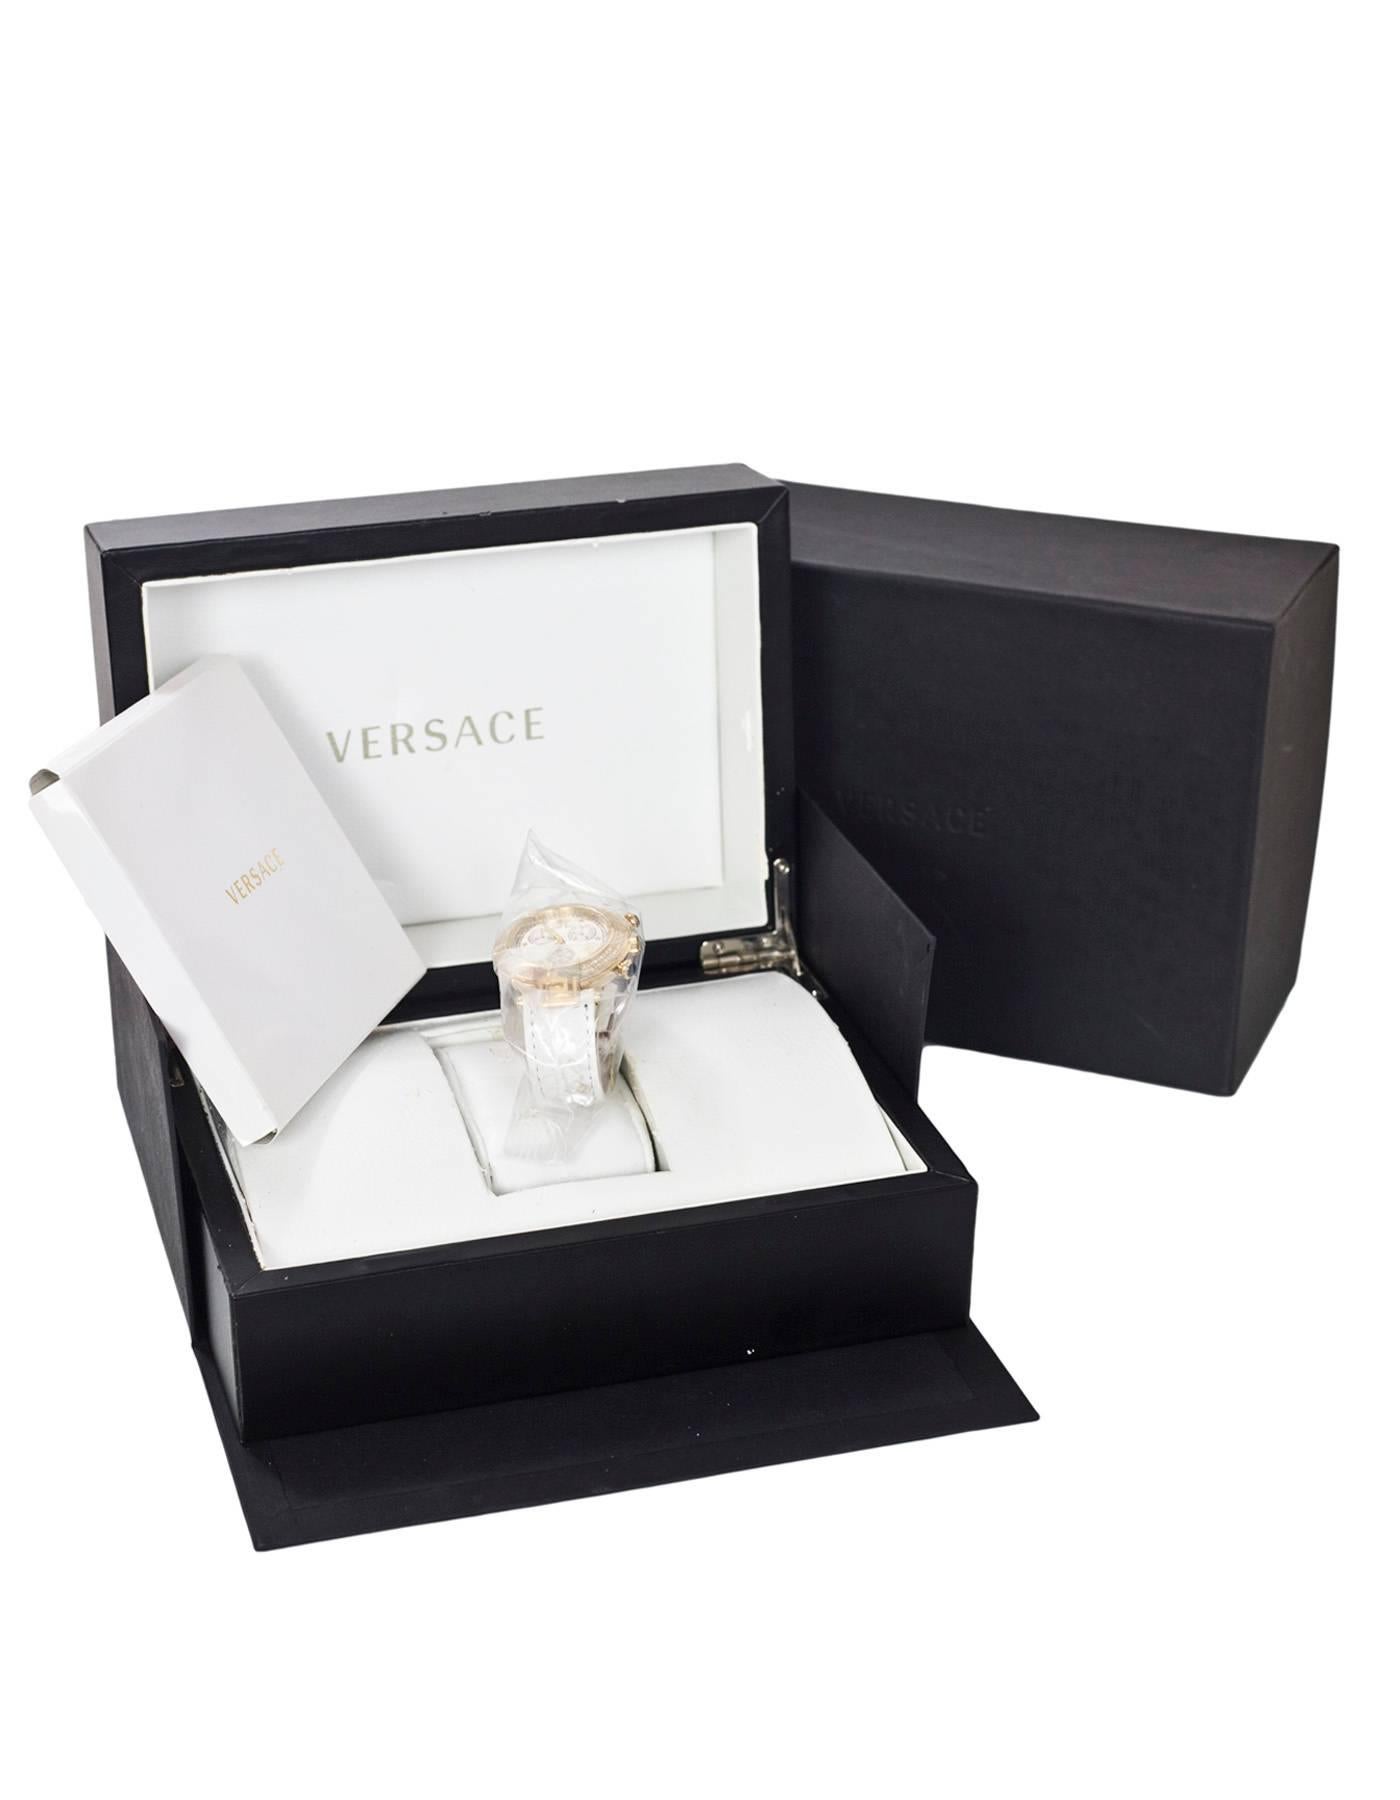 Versace White Python Reve Diamond Bezel Watch RT. $3, 500 1